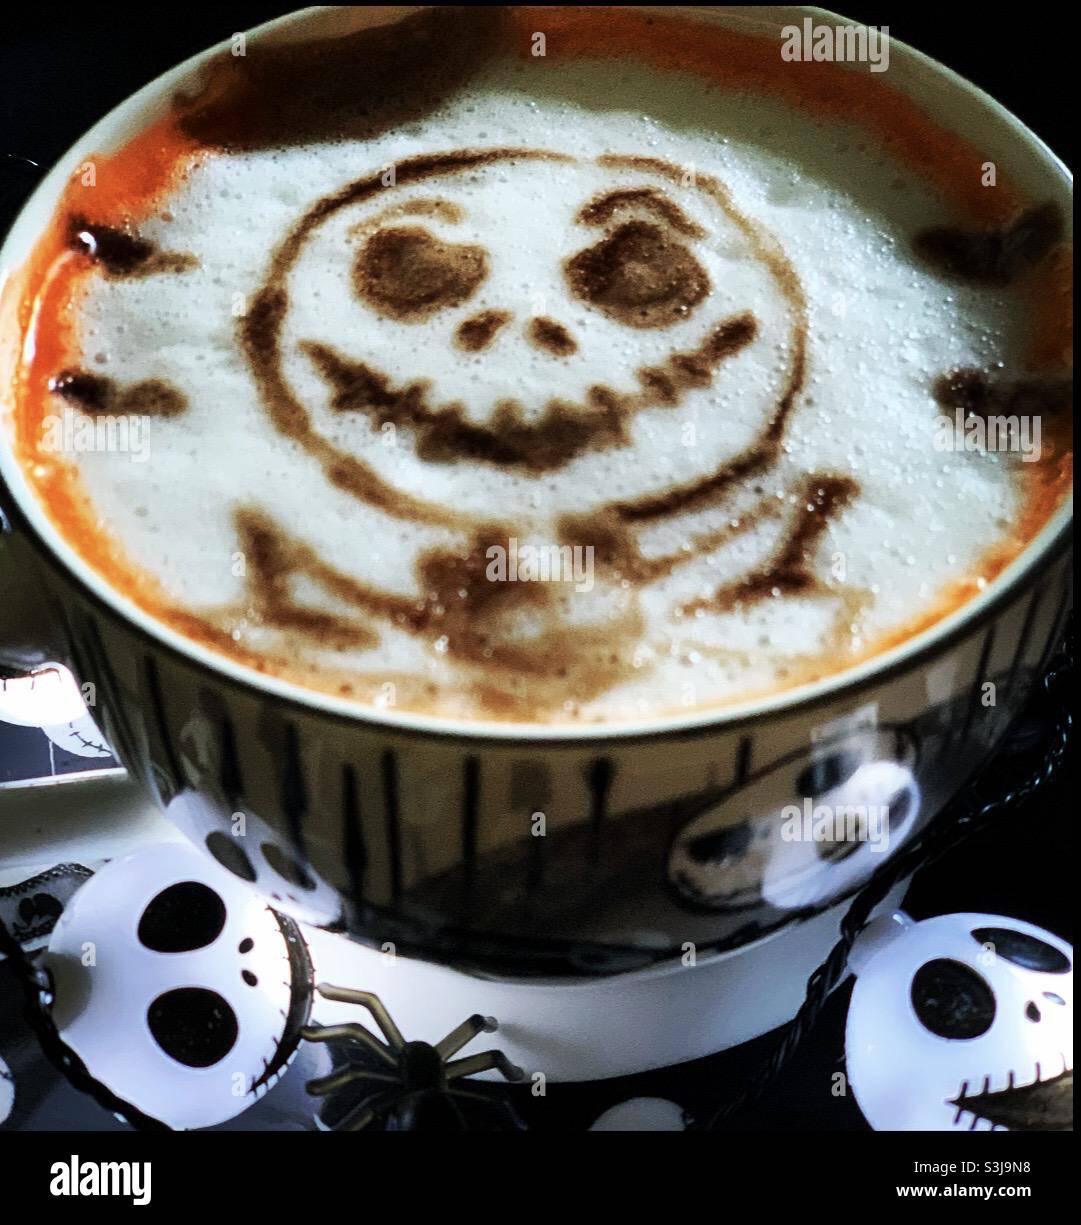 Disney Jack skellington latte Stock Photo